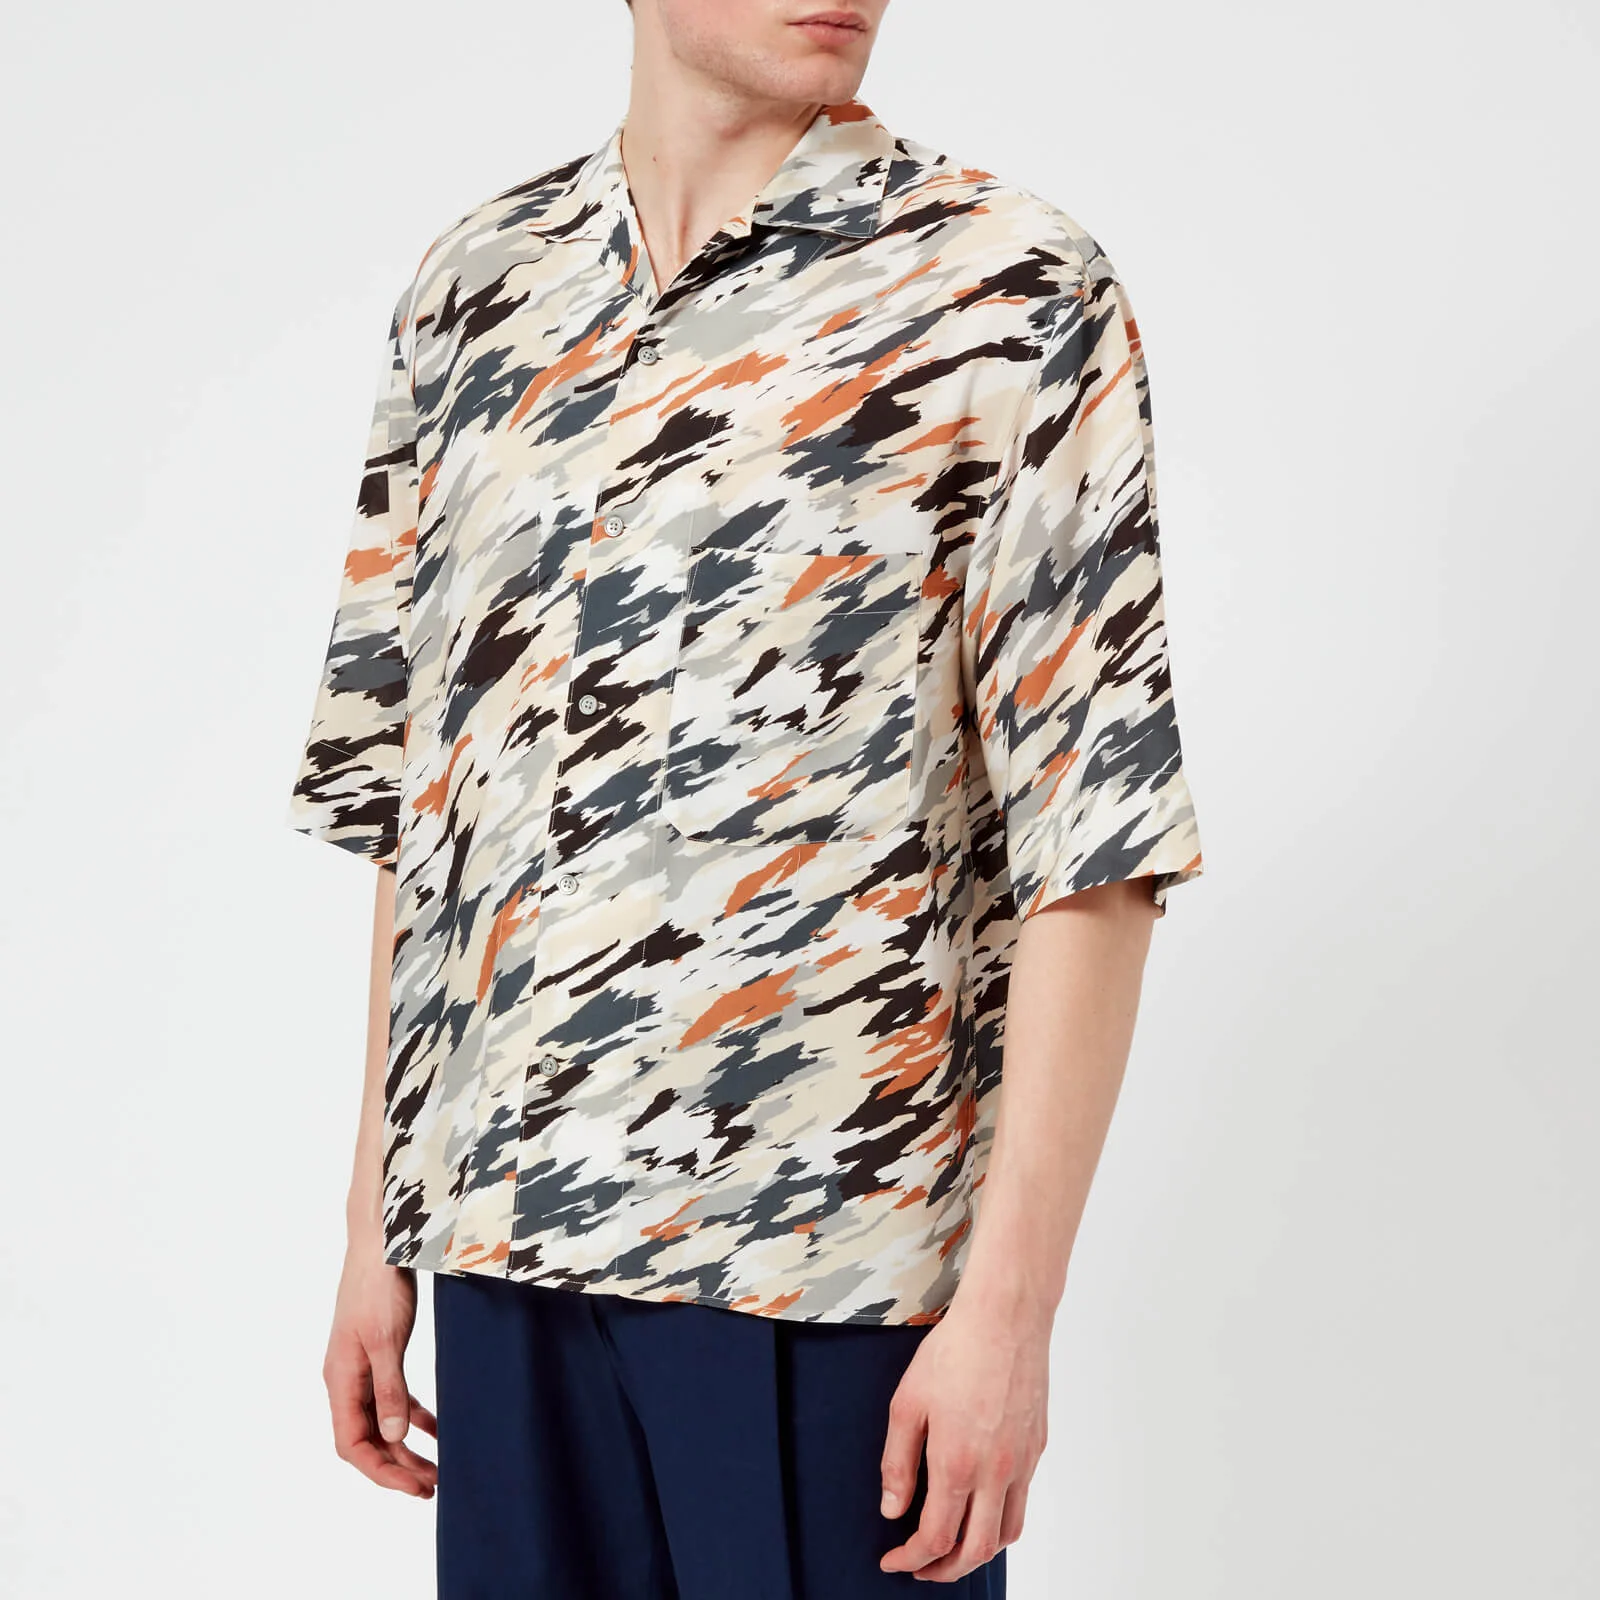 Lemaire Men's Convertible Collar Short Sleeve Shirt - Multi Image 1